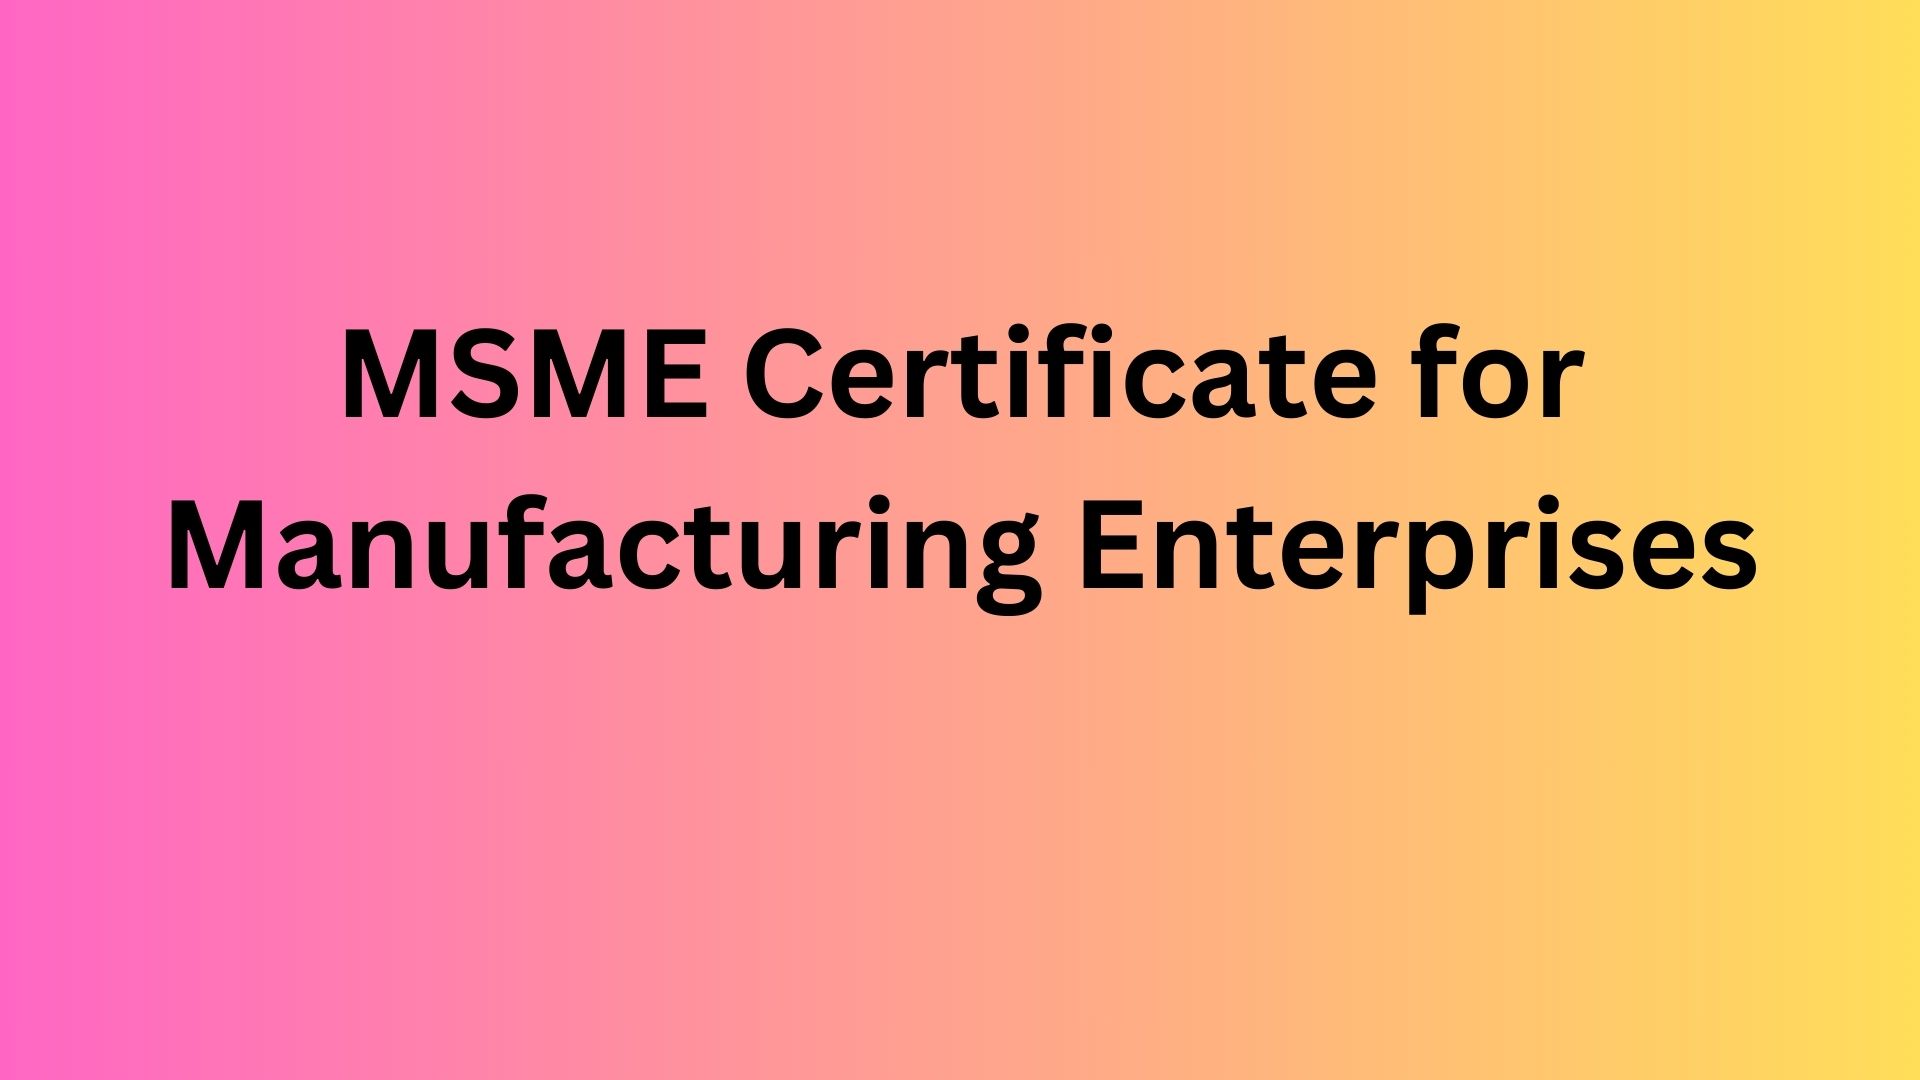 MSME Certificate for Manufacturing Enterprises